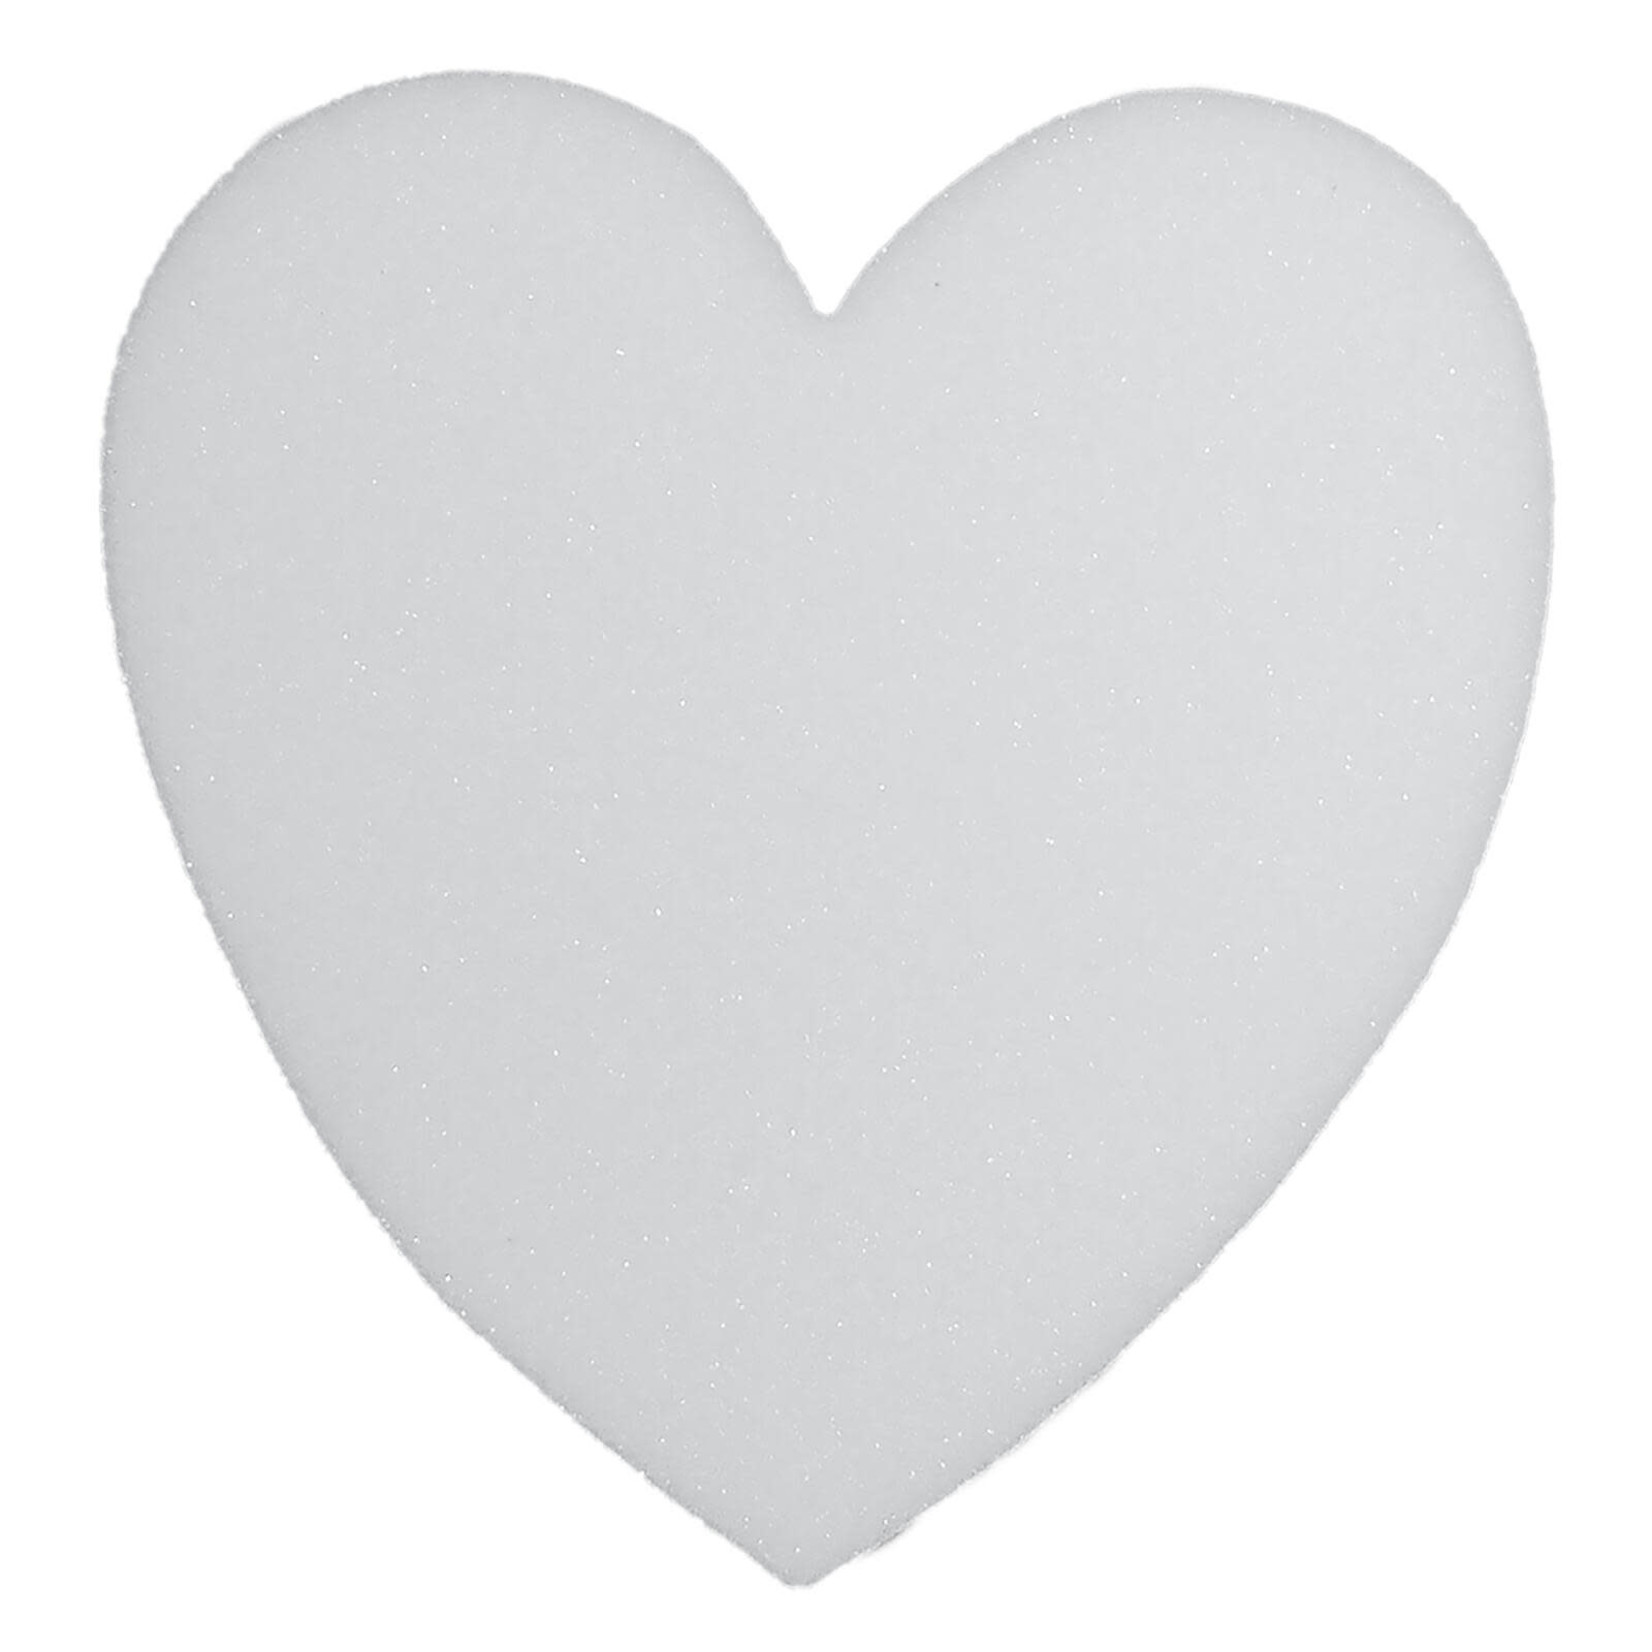 22x2"" White solid STYROFOAM Heart